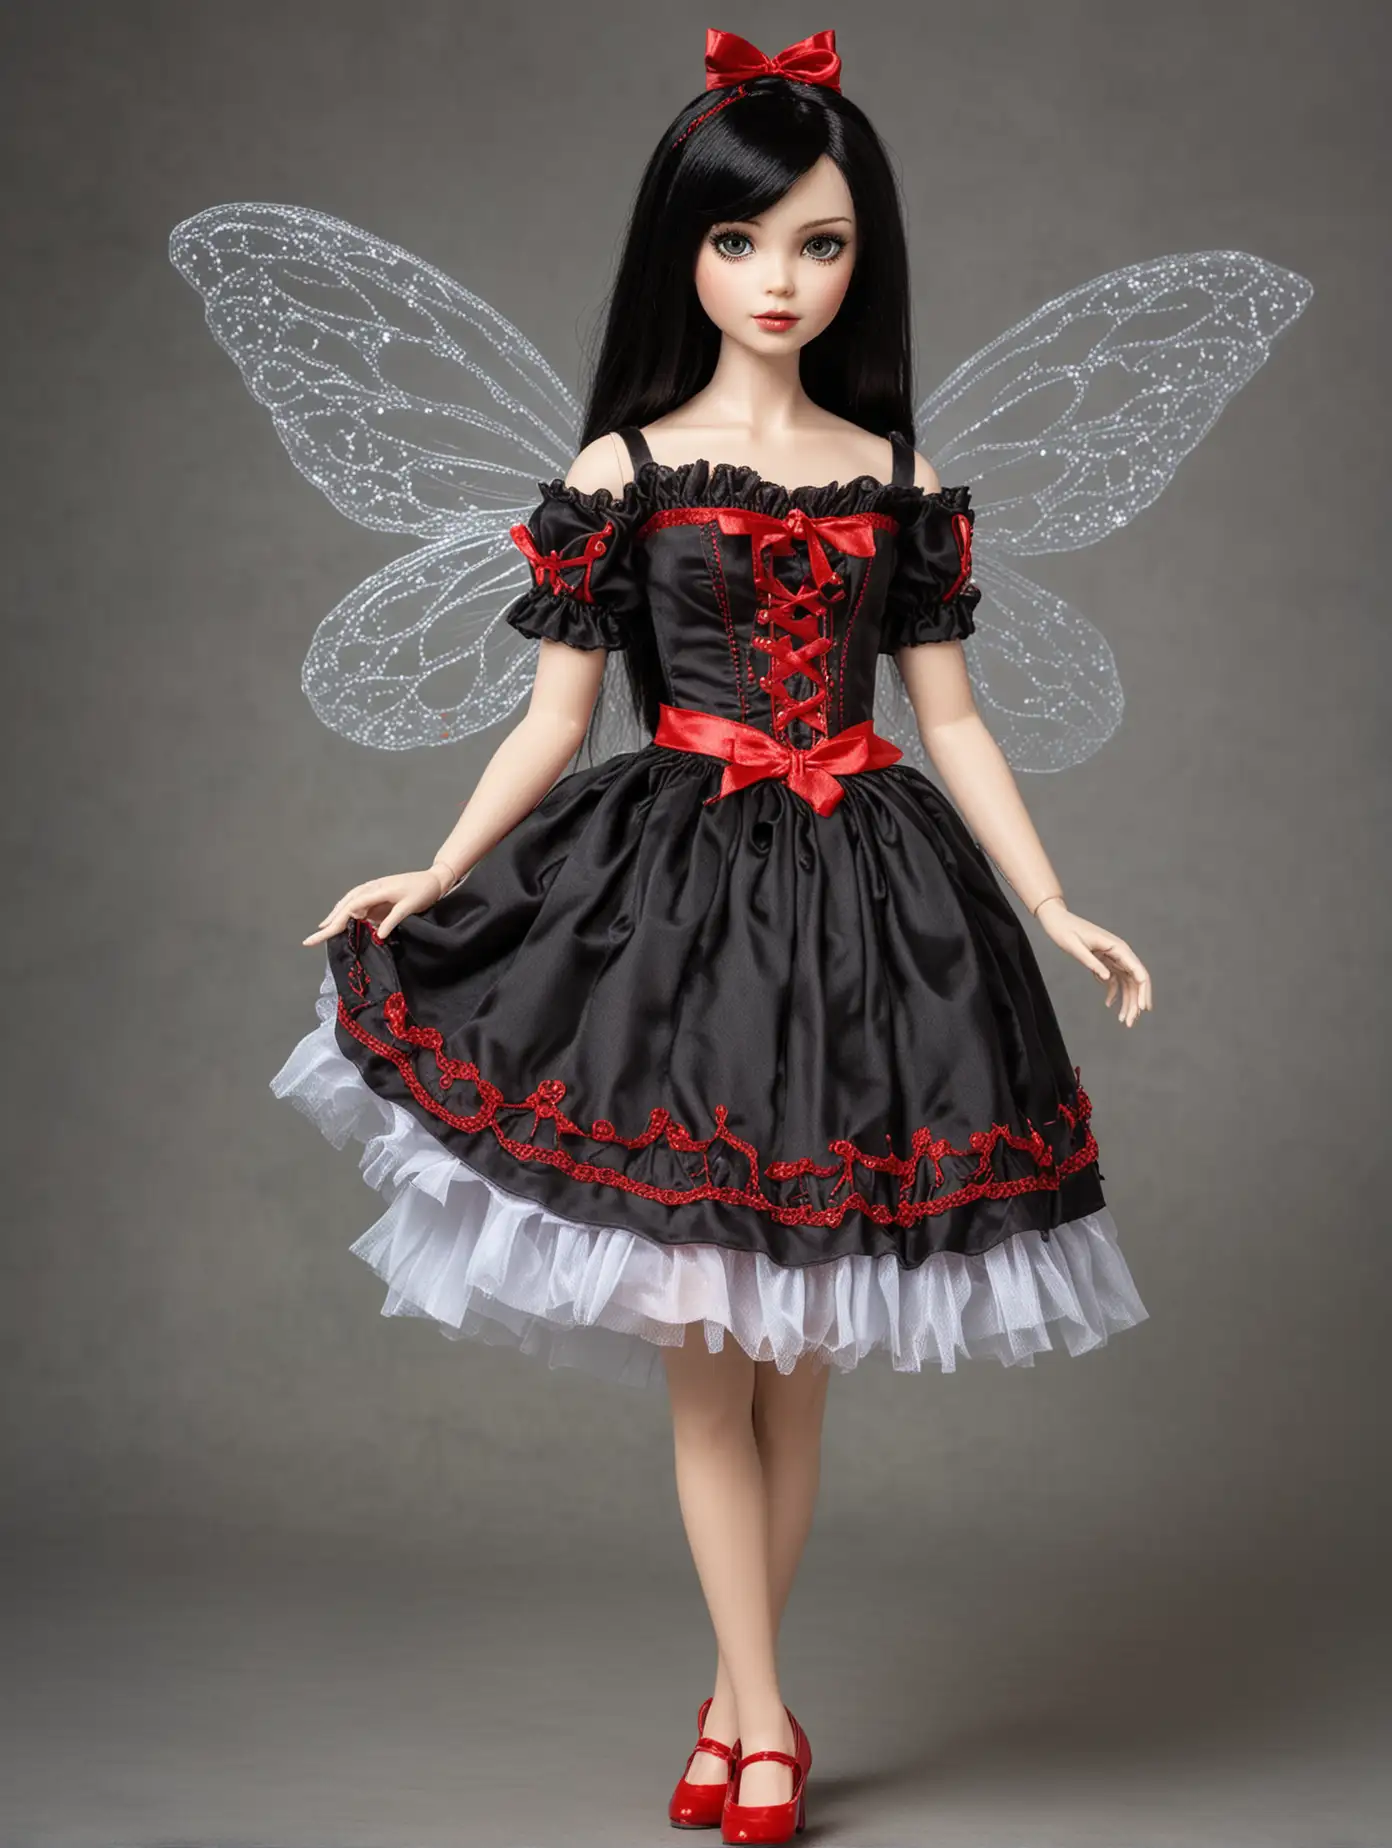 Enchanting Teenage Doll in Fairy Costume with Shoulderlength Black Hair